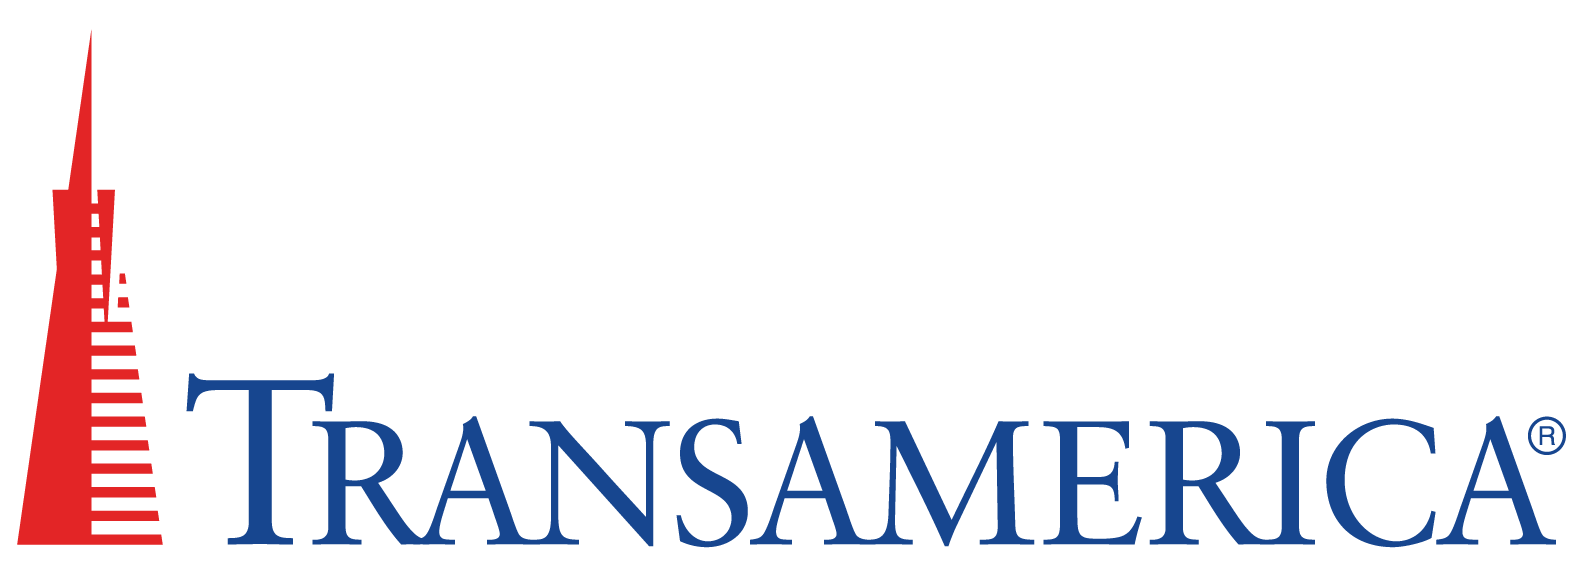 Transamerica company logo